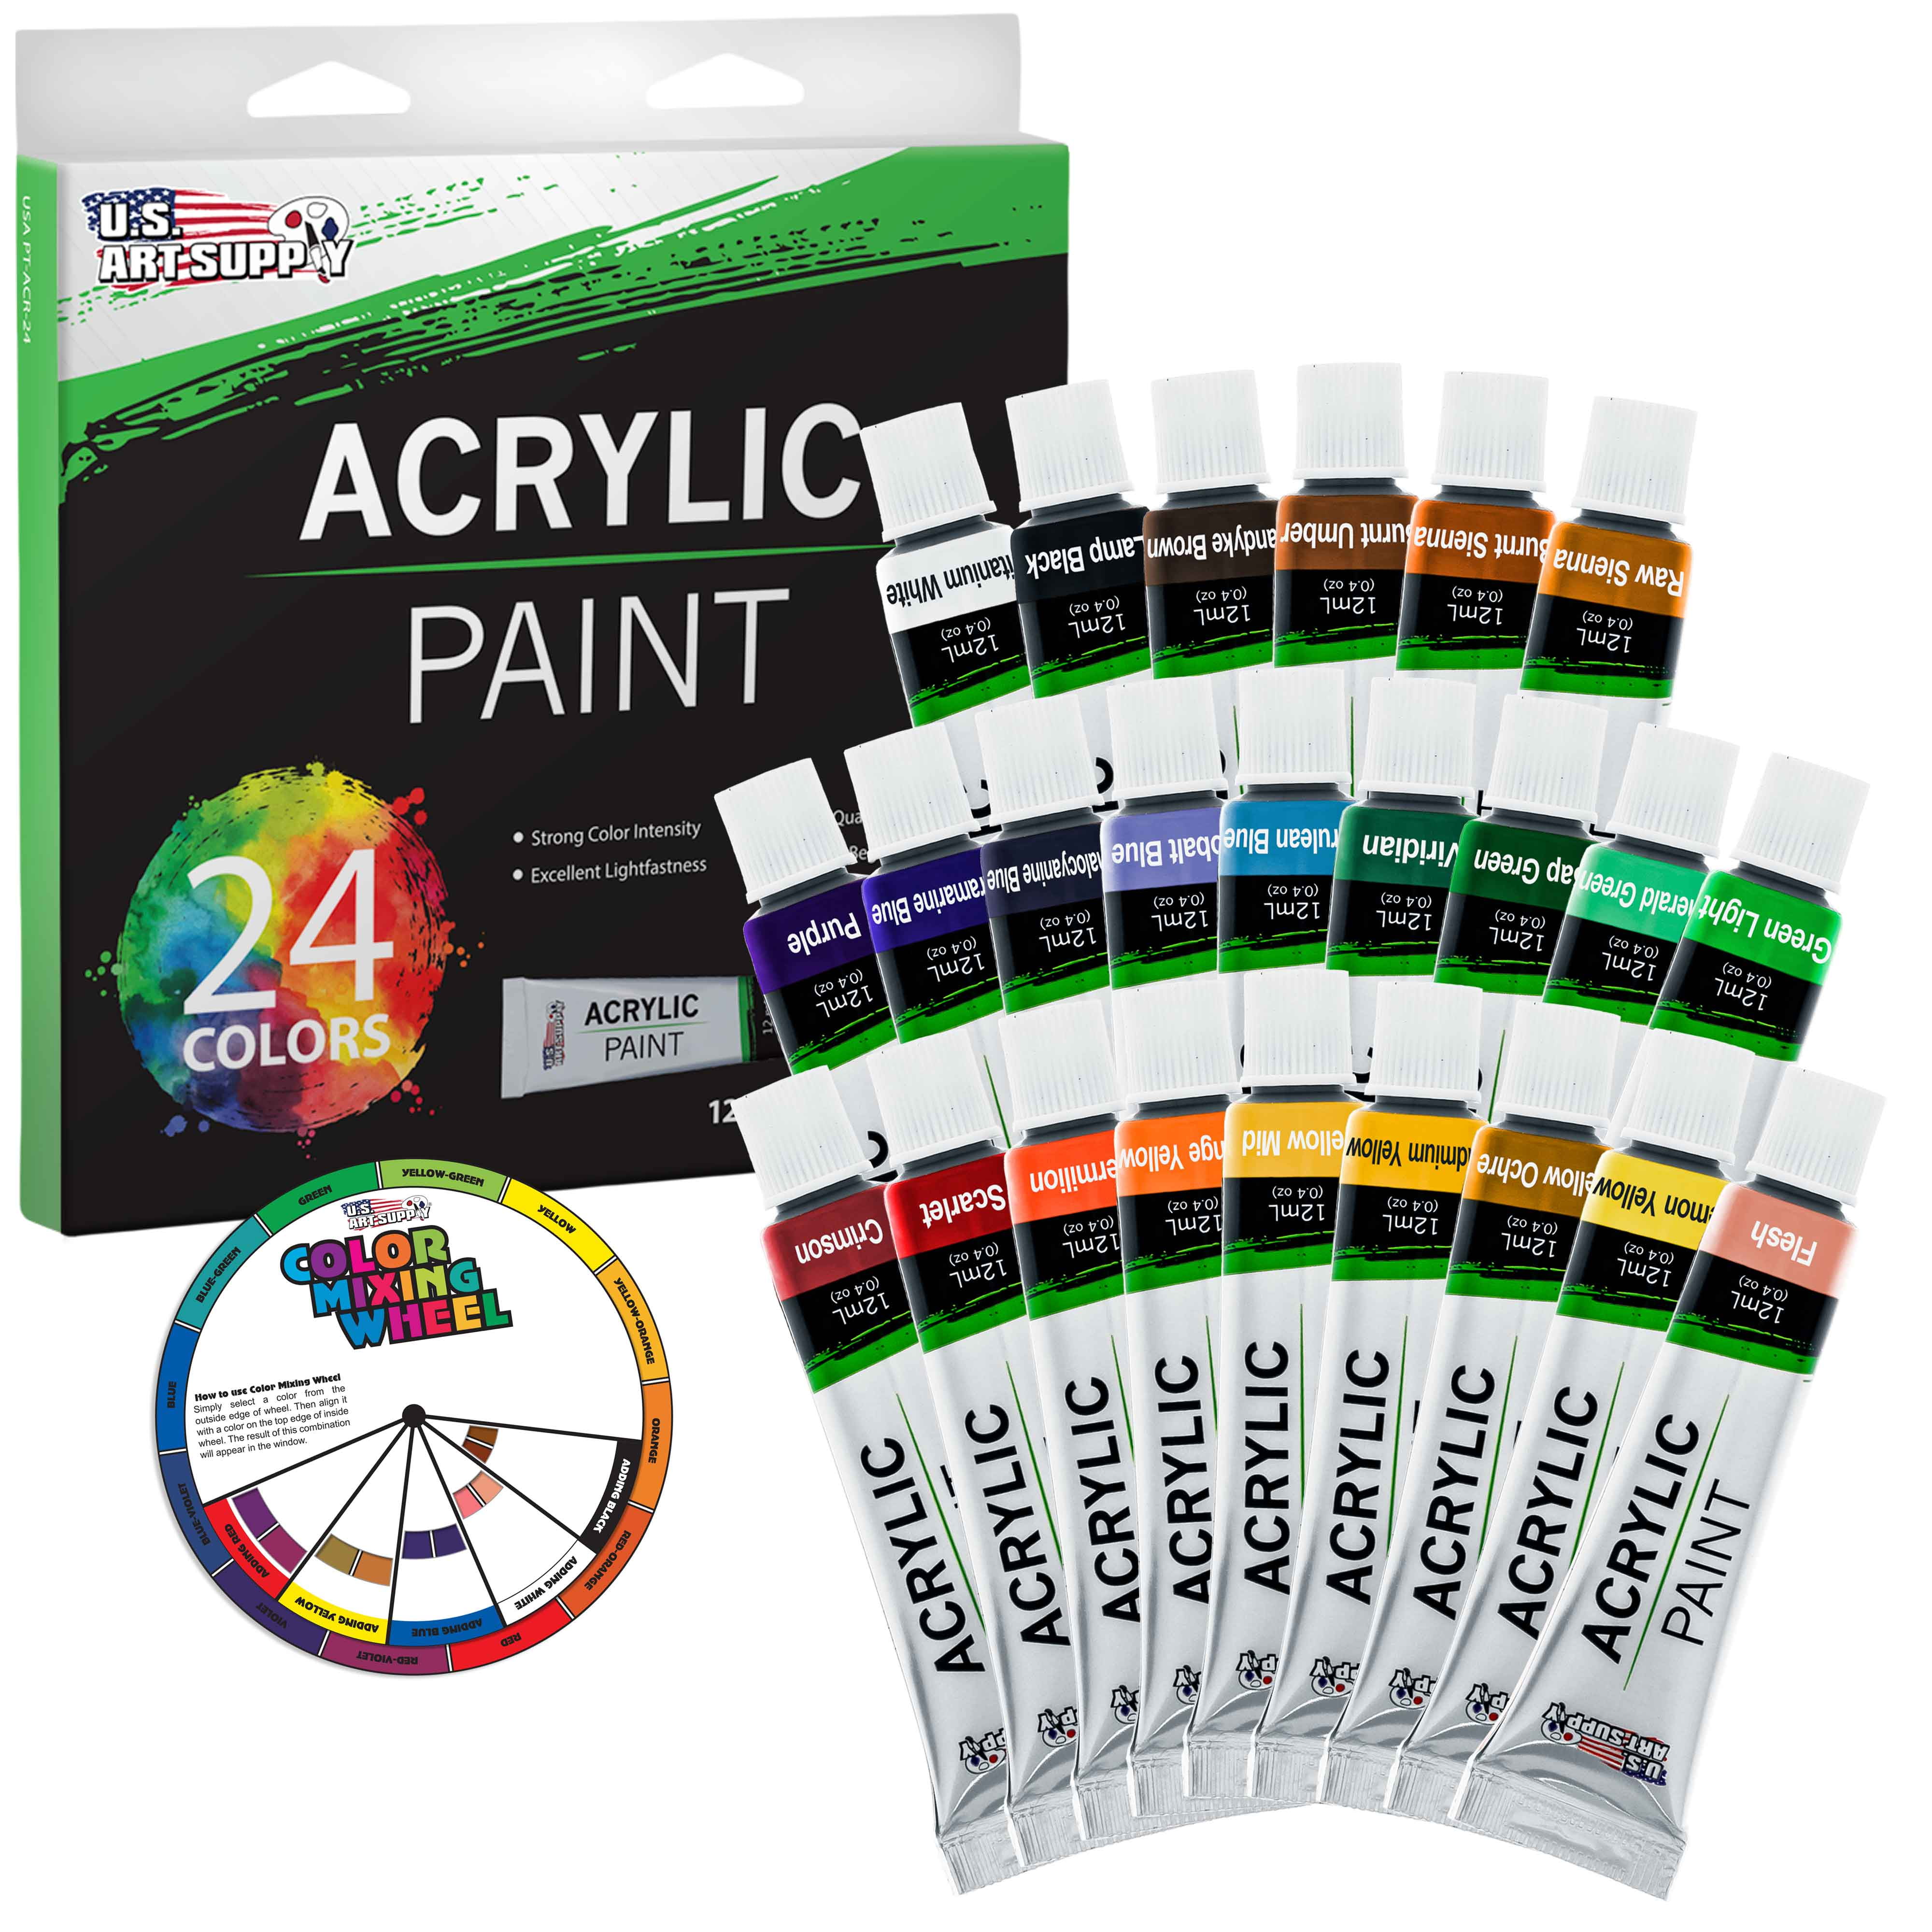 Acrylic Paint, 12ml Tubes with 3 FREE Paint Brushes - Set of 30